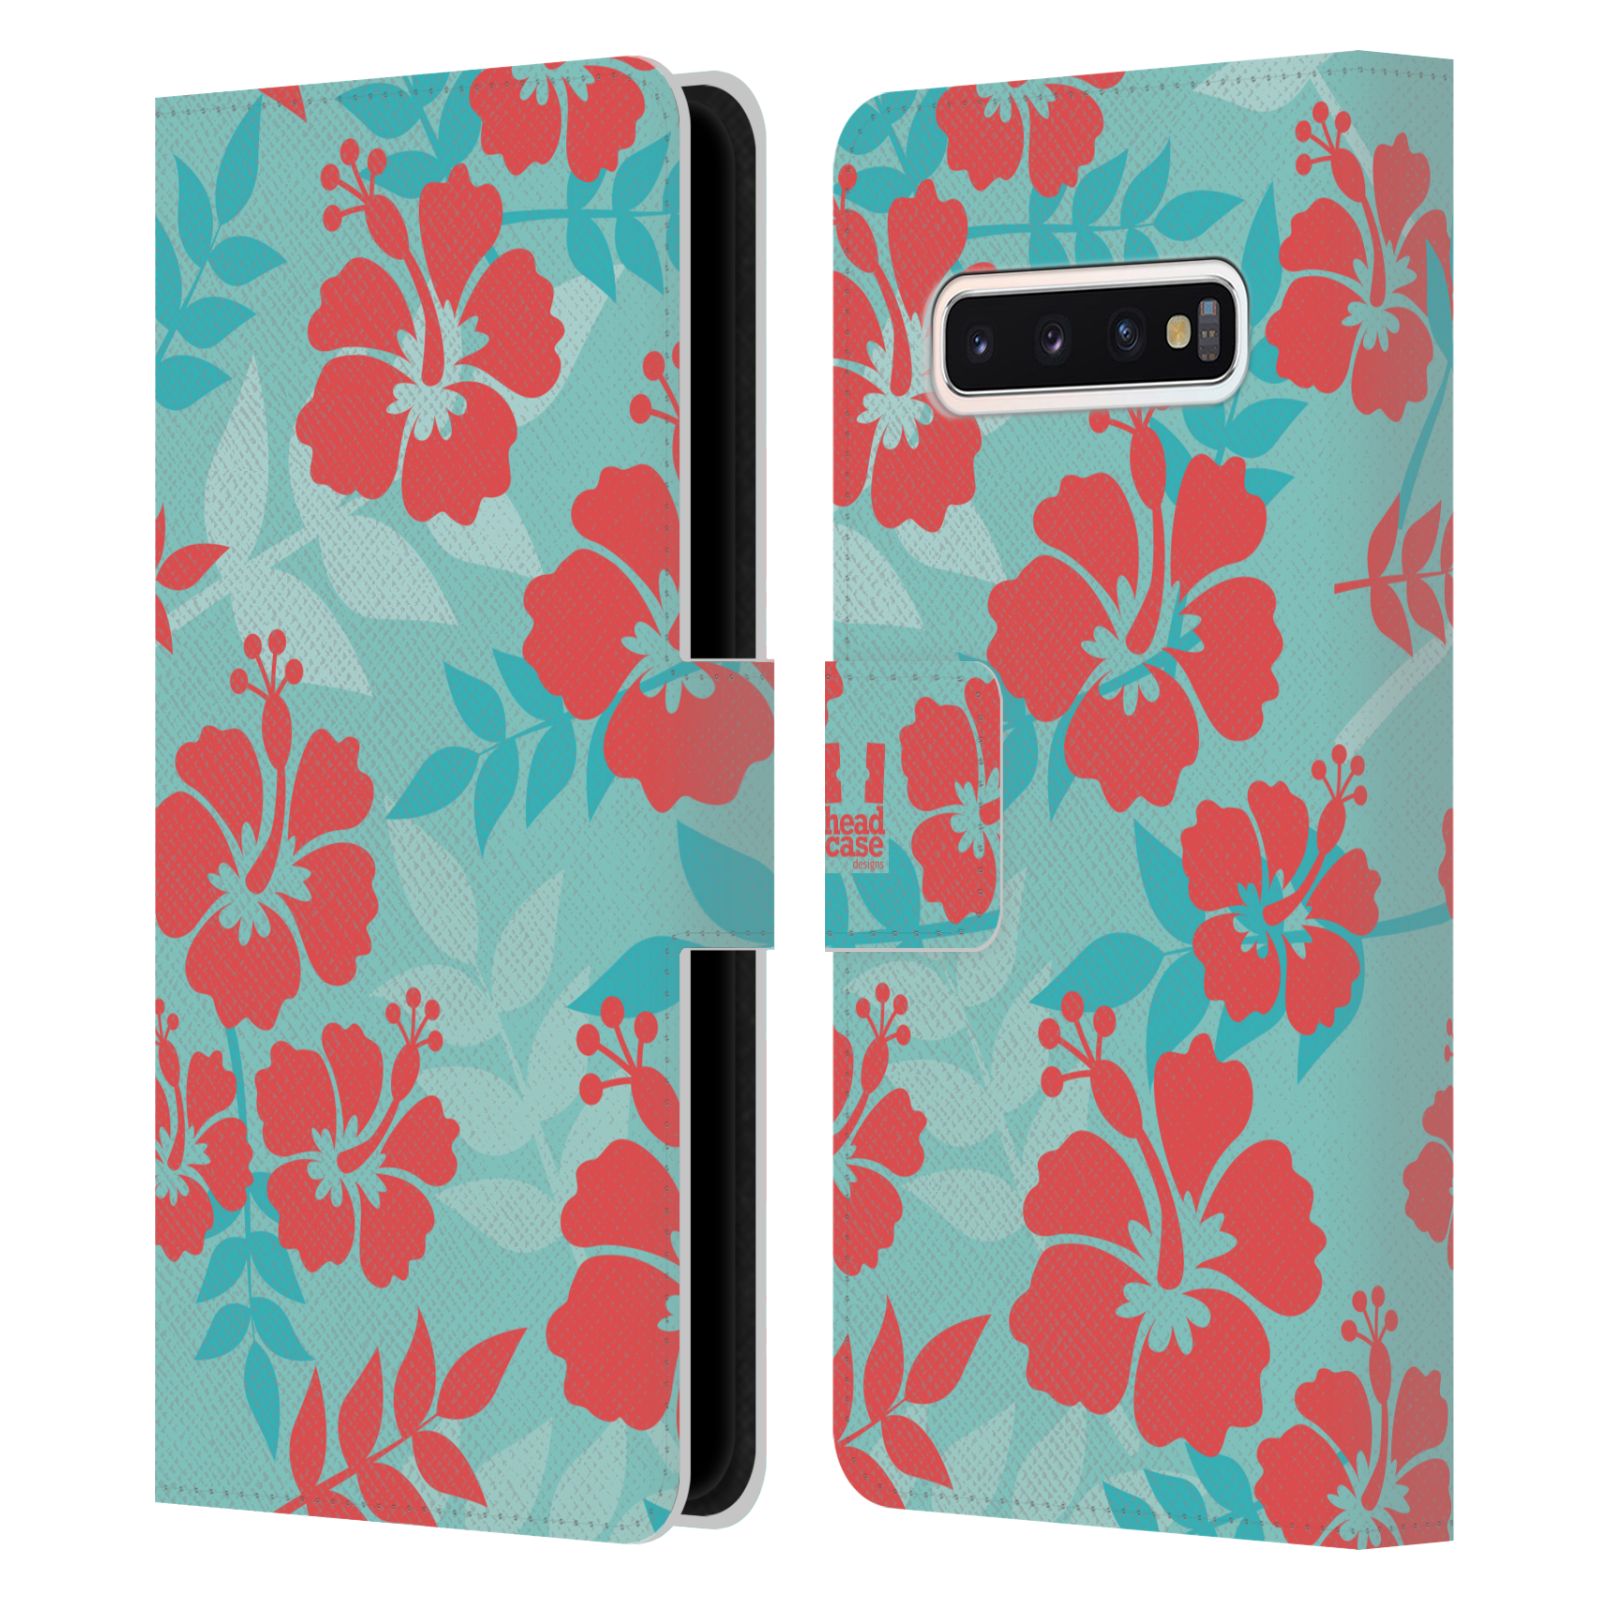 Pouzdro HEAD CASE na mobil Samsung Galaxy S10 Havajský vzor Ibišek květ modrá a růžová